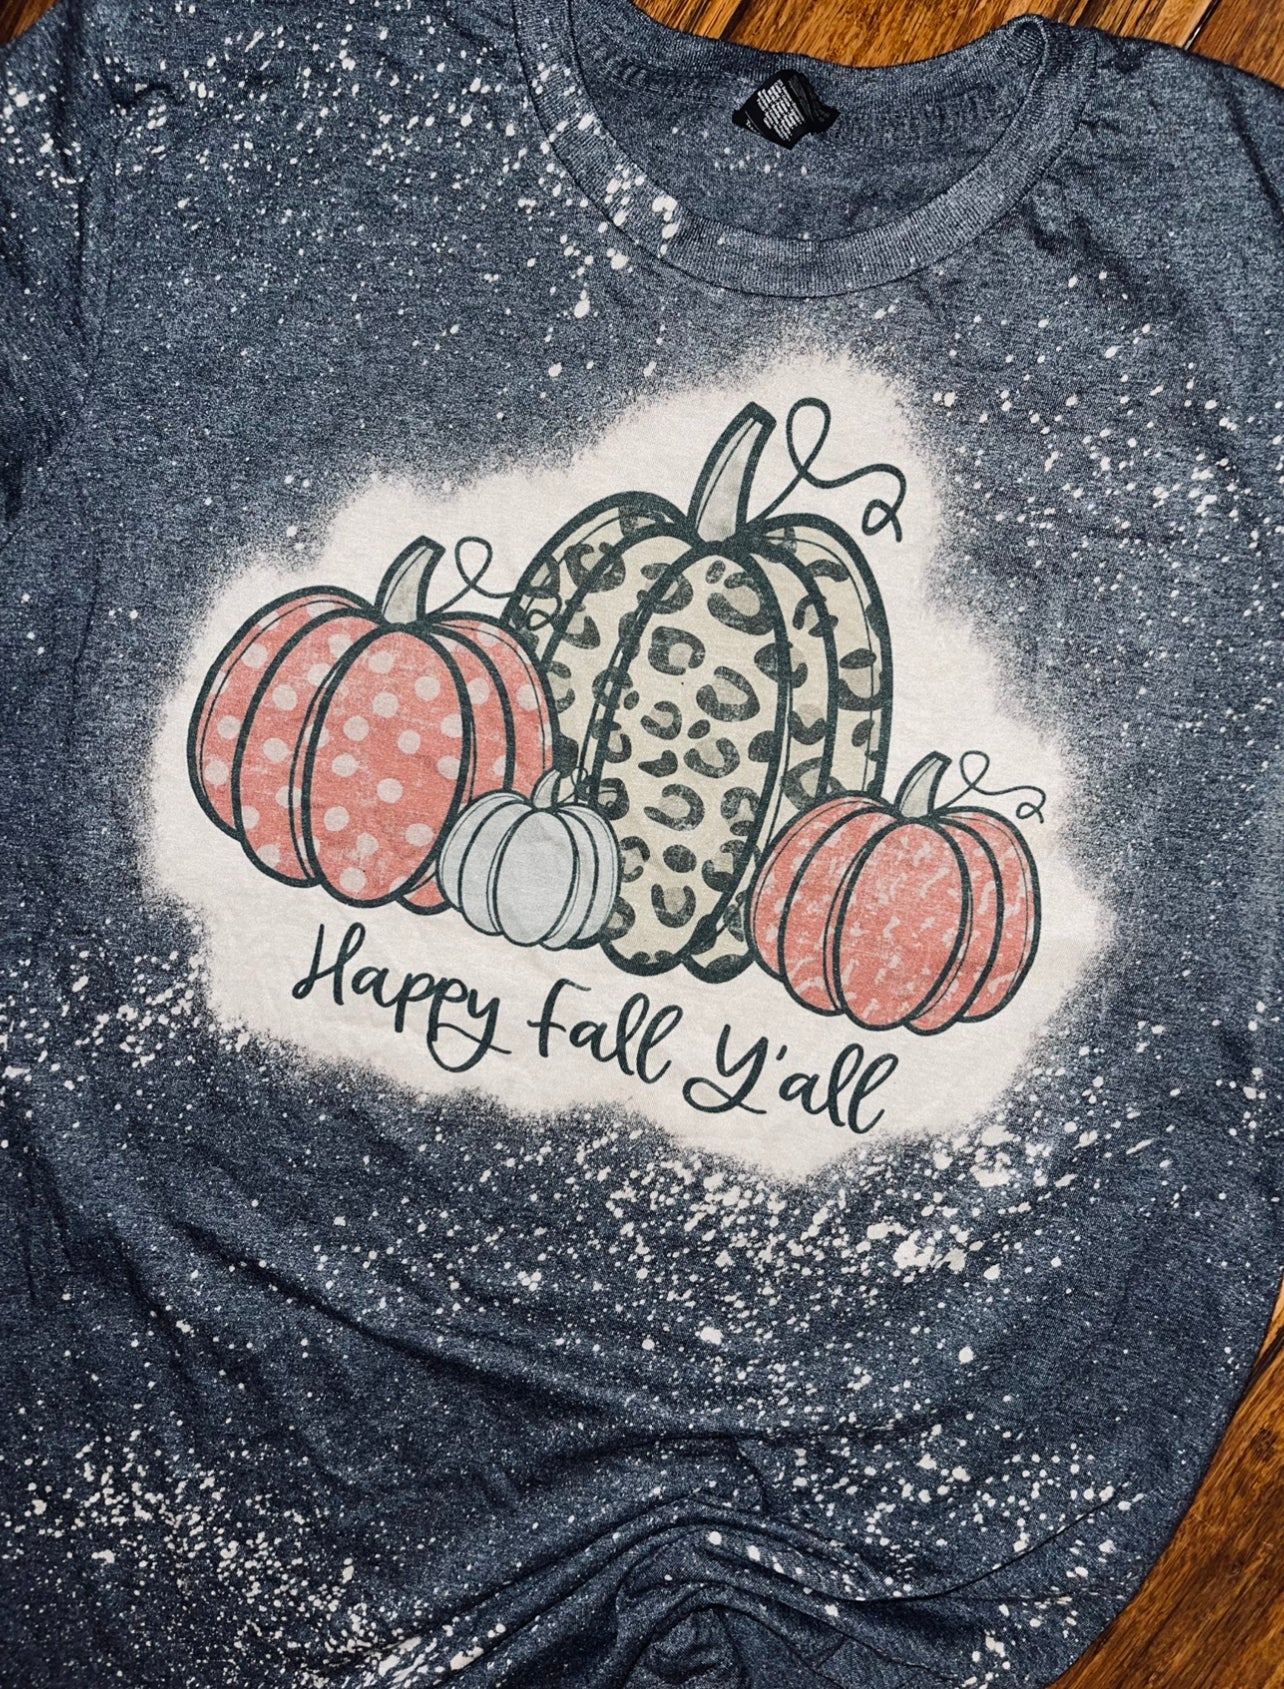 Happy fall yall tee